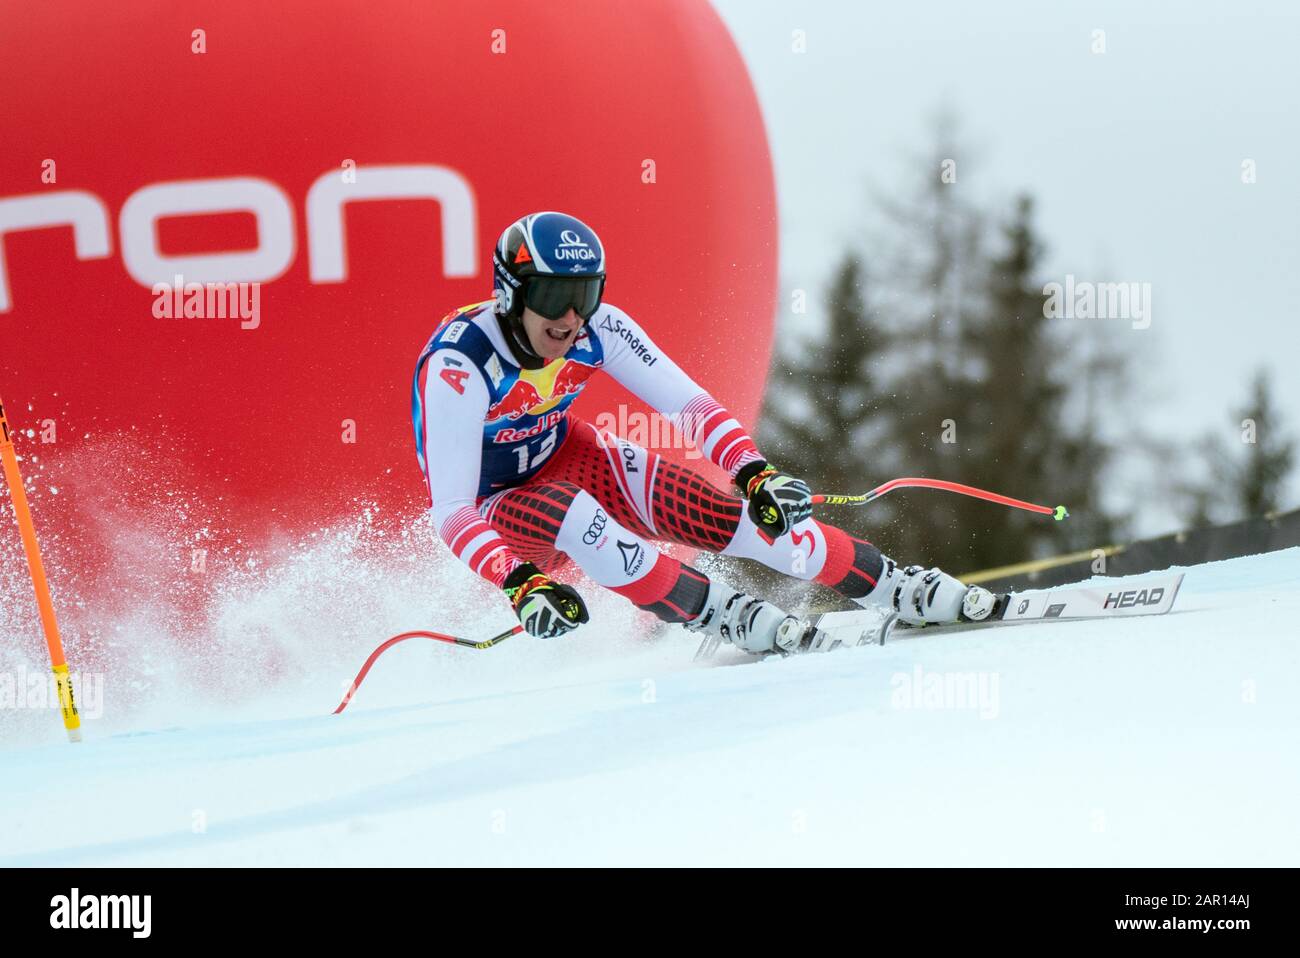 Kitzbuehel, Austria. 25th gennaio 2020. Matthias Mayer d'Austria presso lo Ski Alpin: 80. Hahnenkamm Race 2020 - Audi FIS Alpine Ski World Cup - Downhill maschile alla Streif il 25 gennaio 2020 a Kitzbuehel, AUSTRIA. Foto Stock